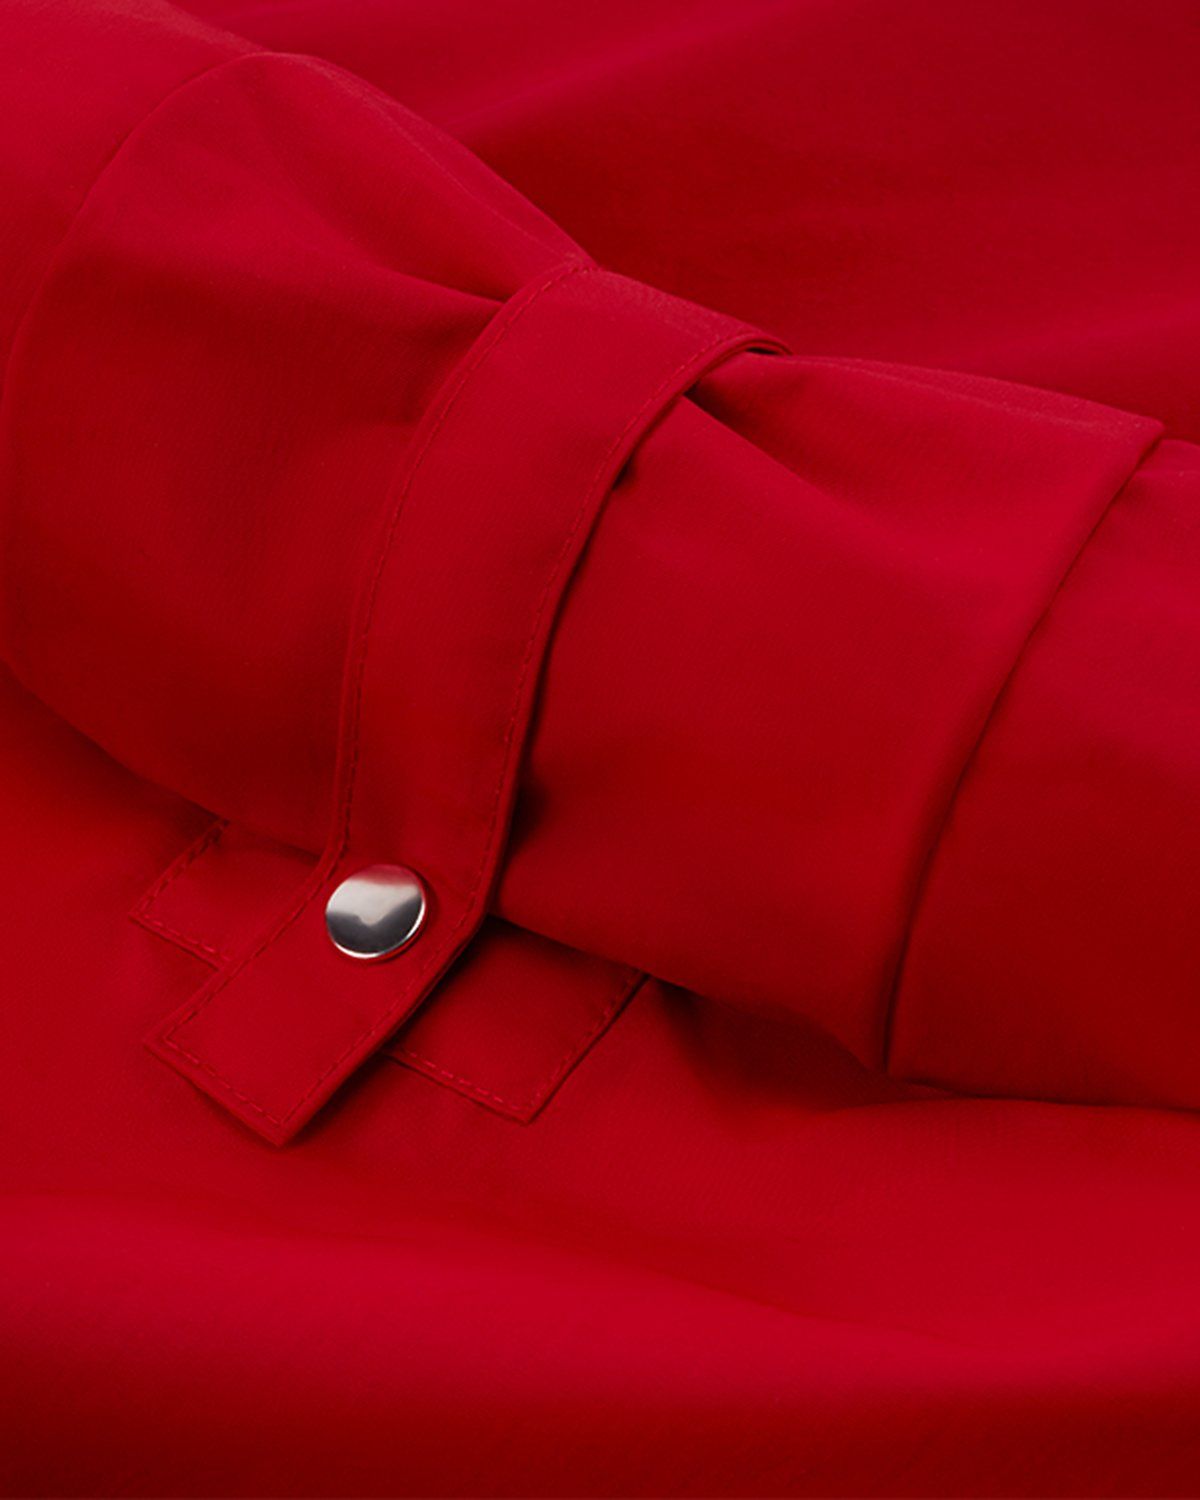 Converse x Kim Jones – Parka Enamel Red - Outerwear - Red - Image 6